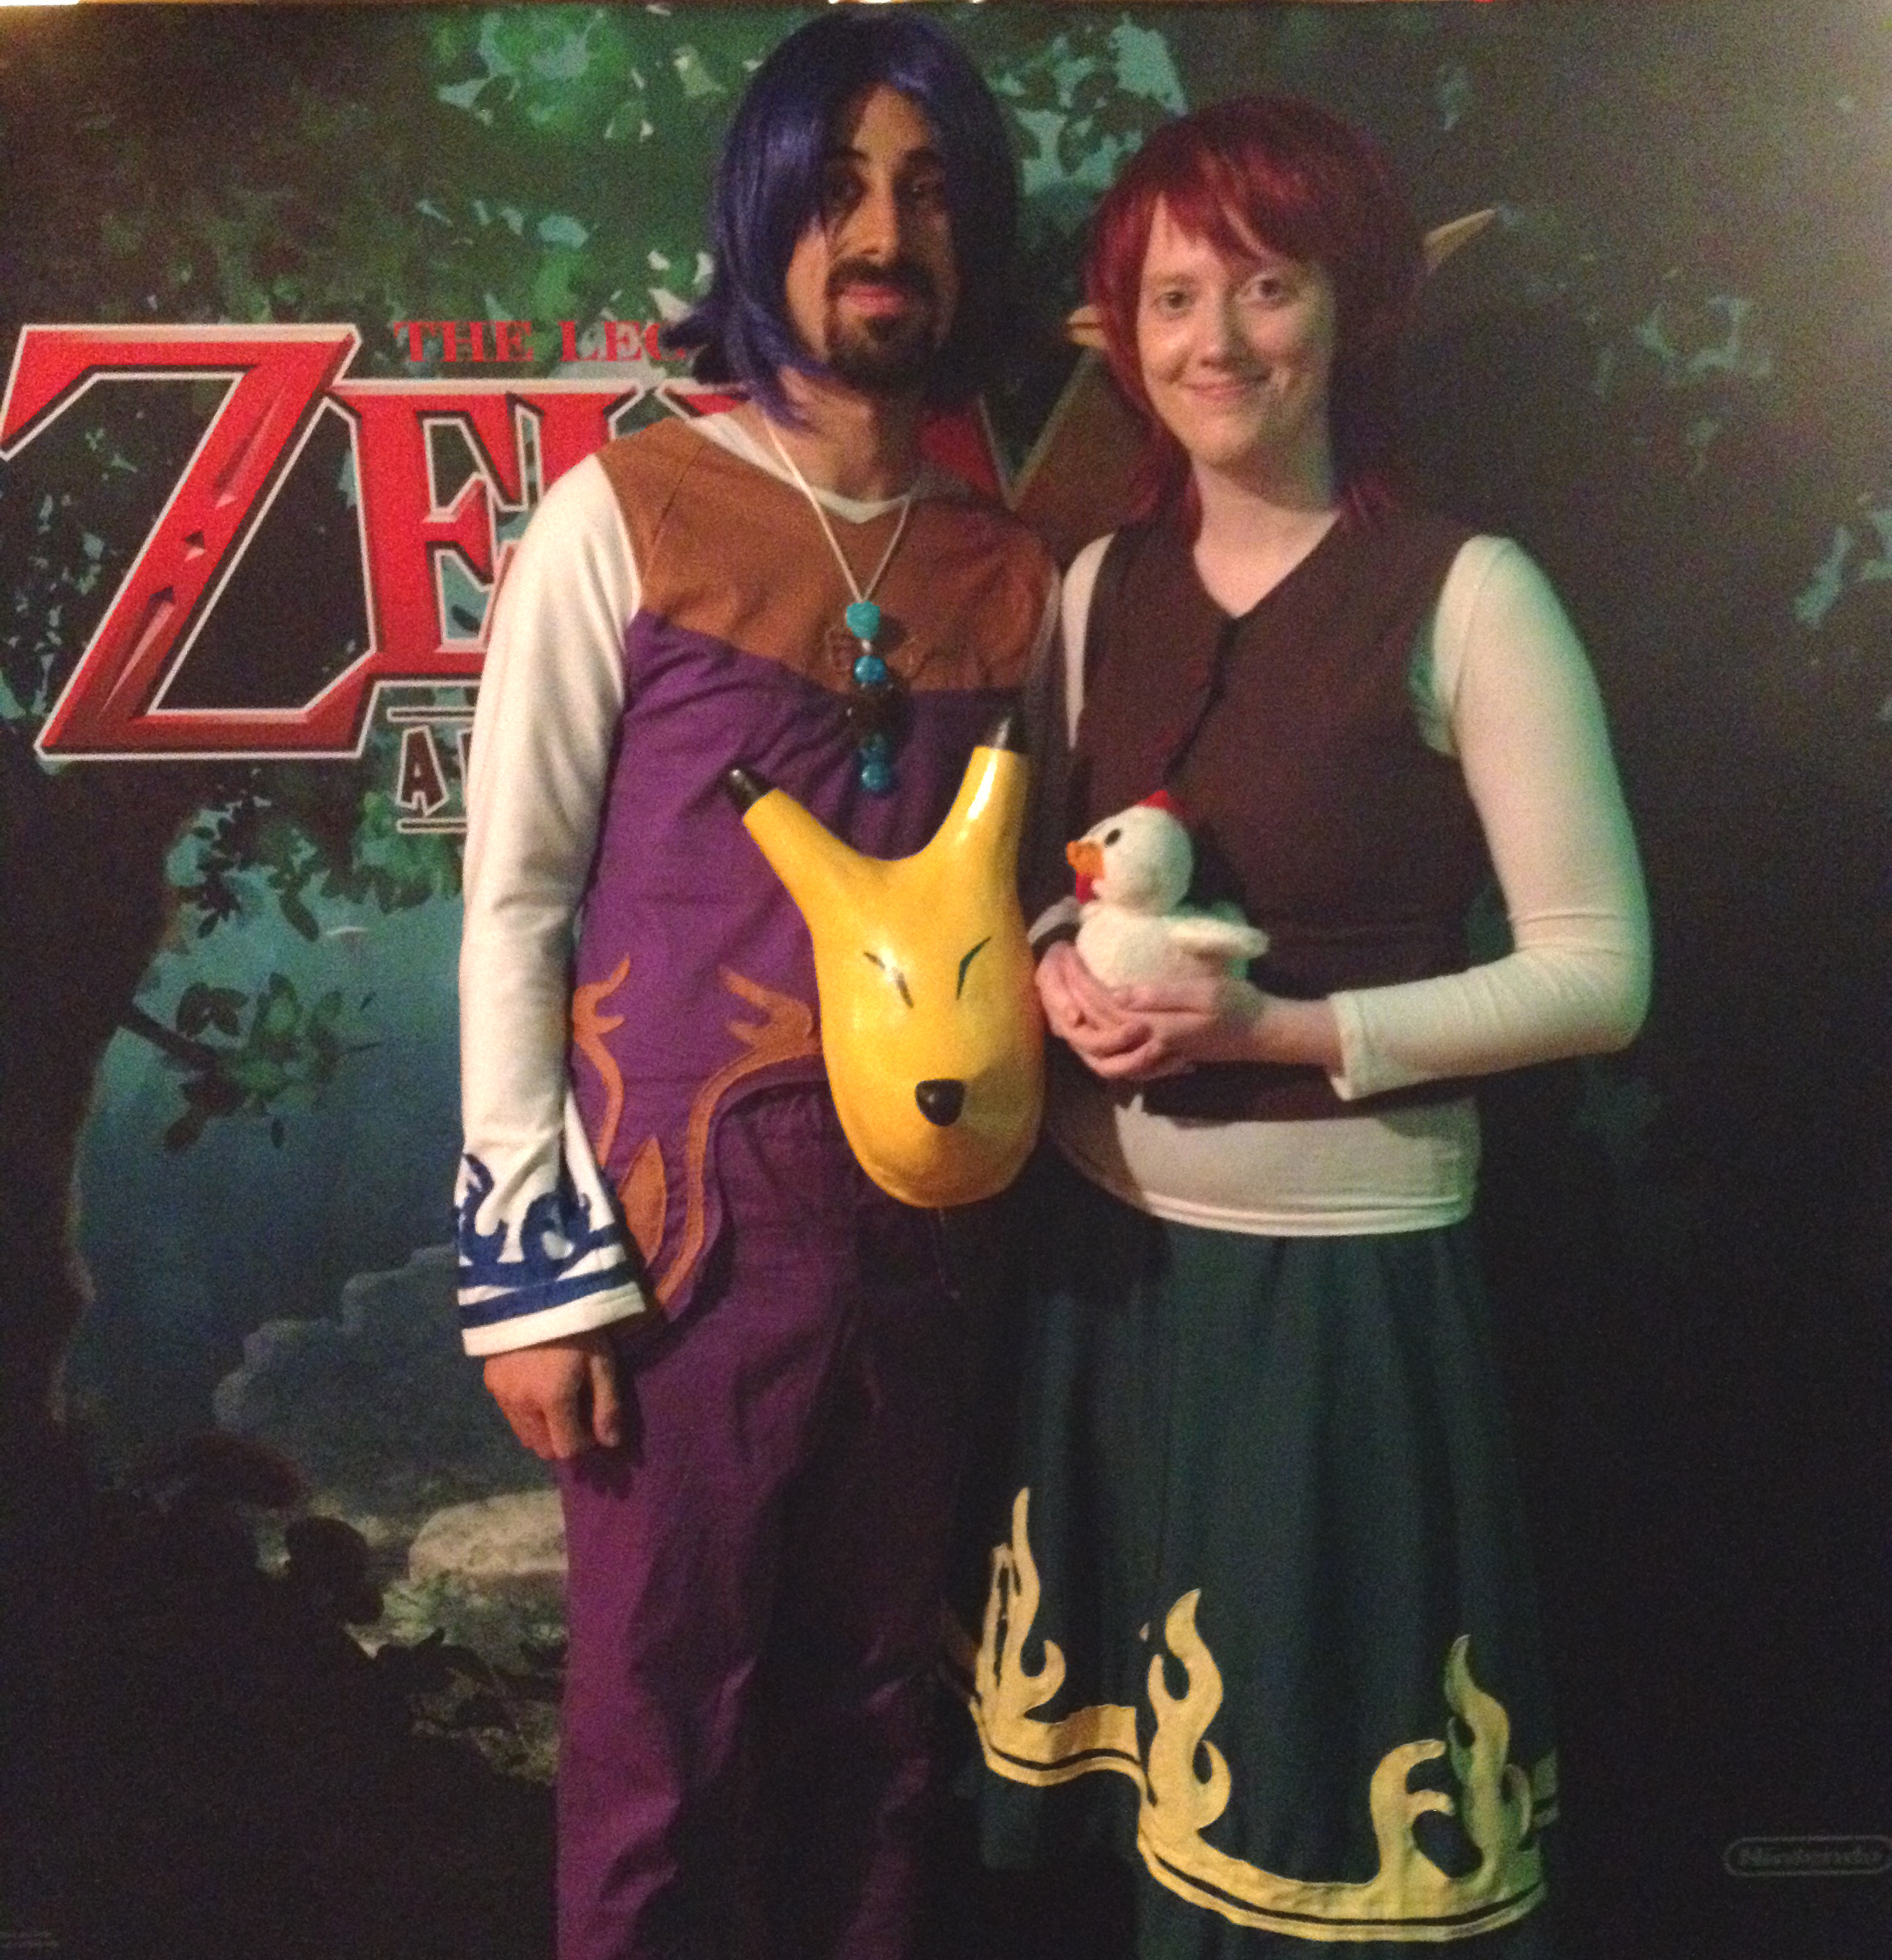 Link & Zelda cosplay at Sci-Fi World – GEEKY GALS